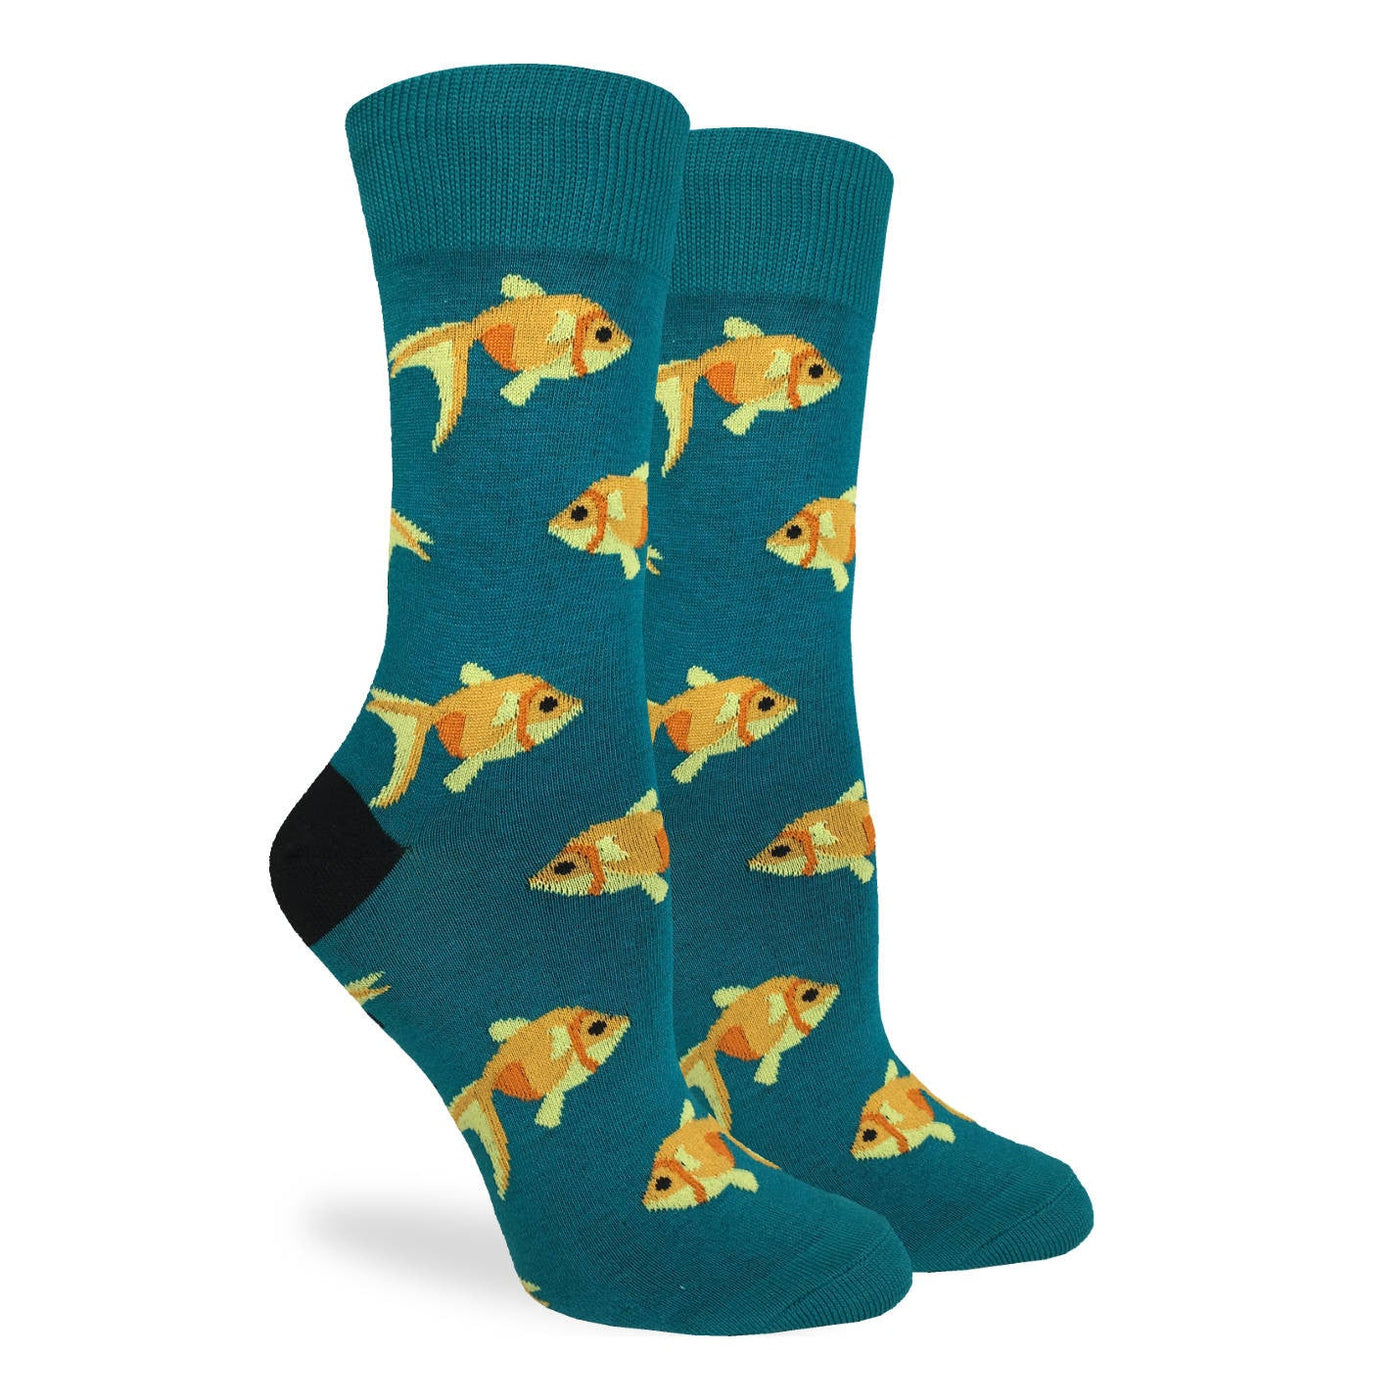 "Goldfish" Cotton Crew Socks by Good Luck Sock - Medium